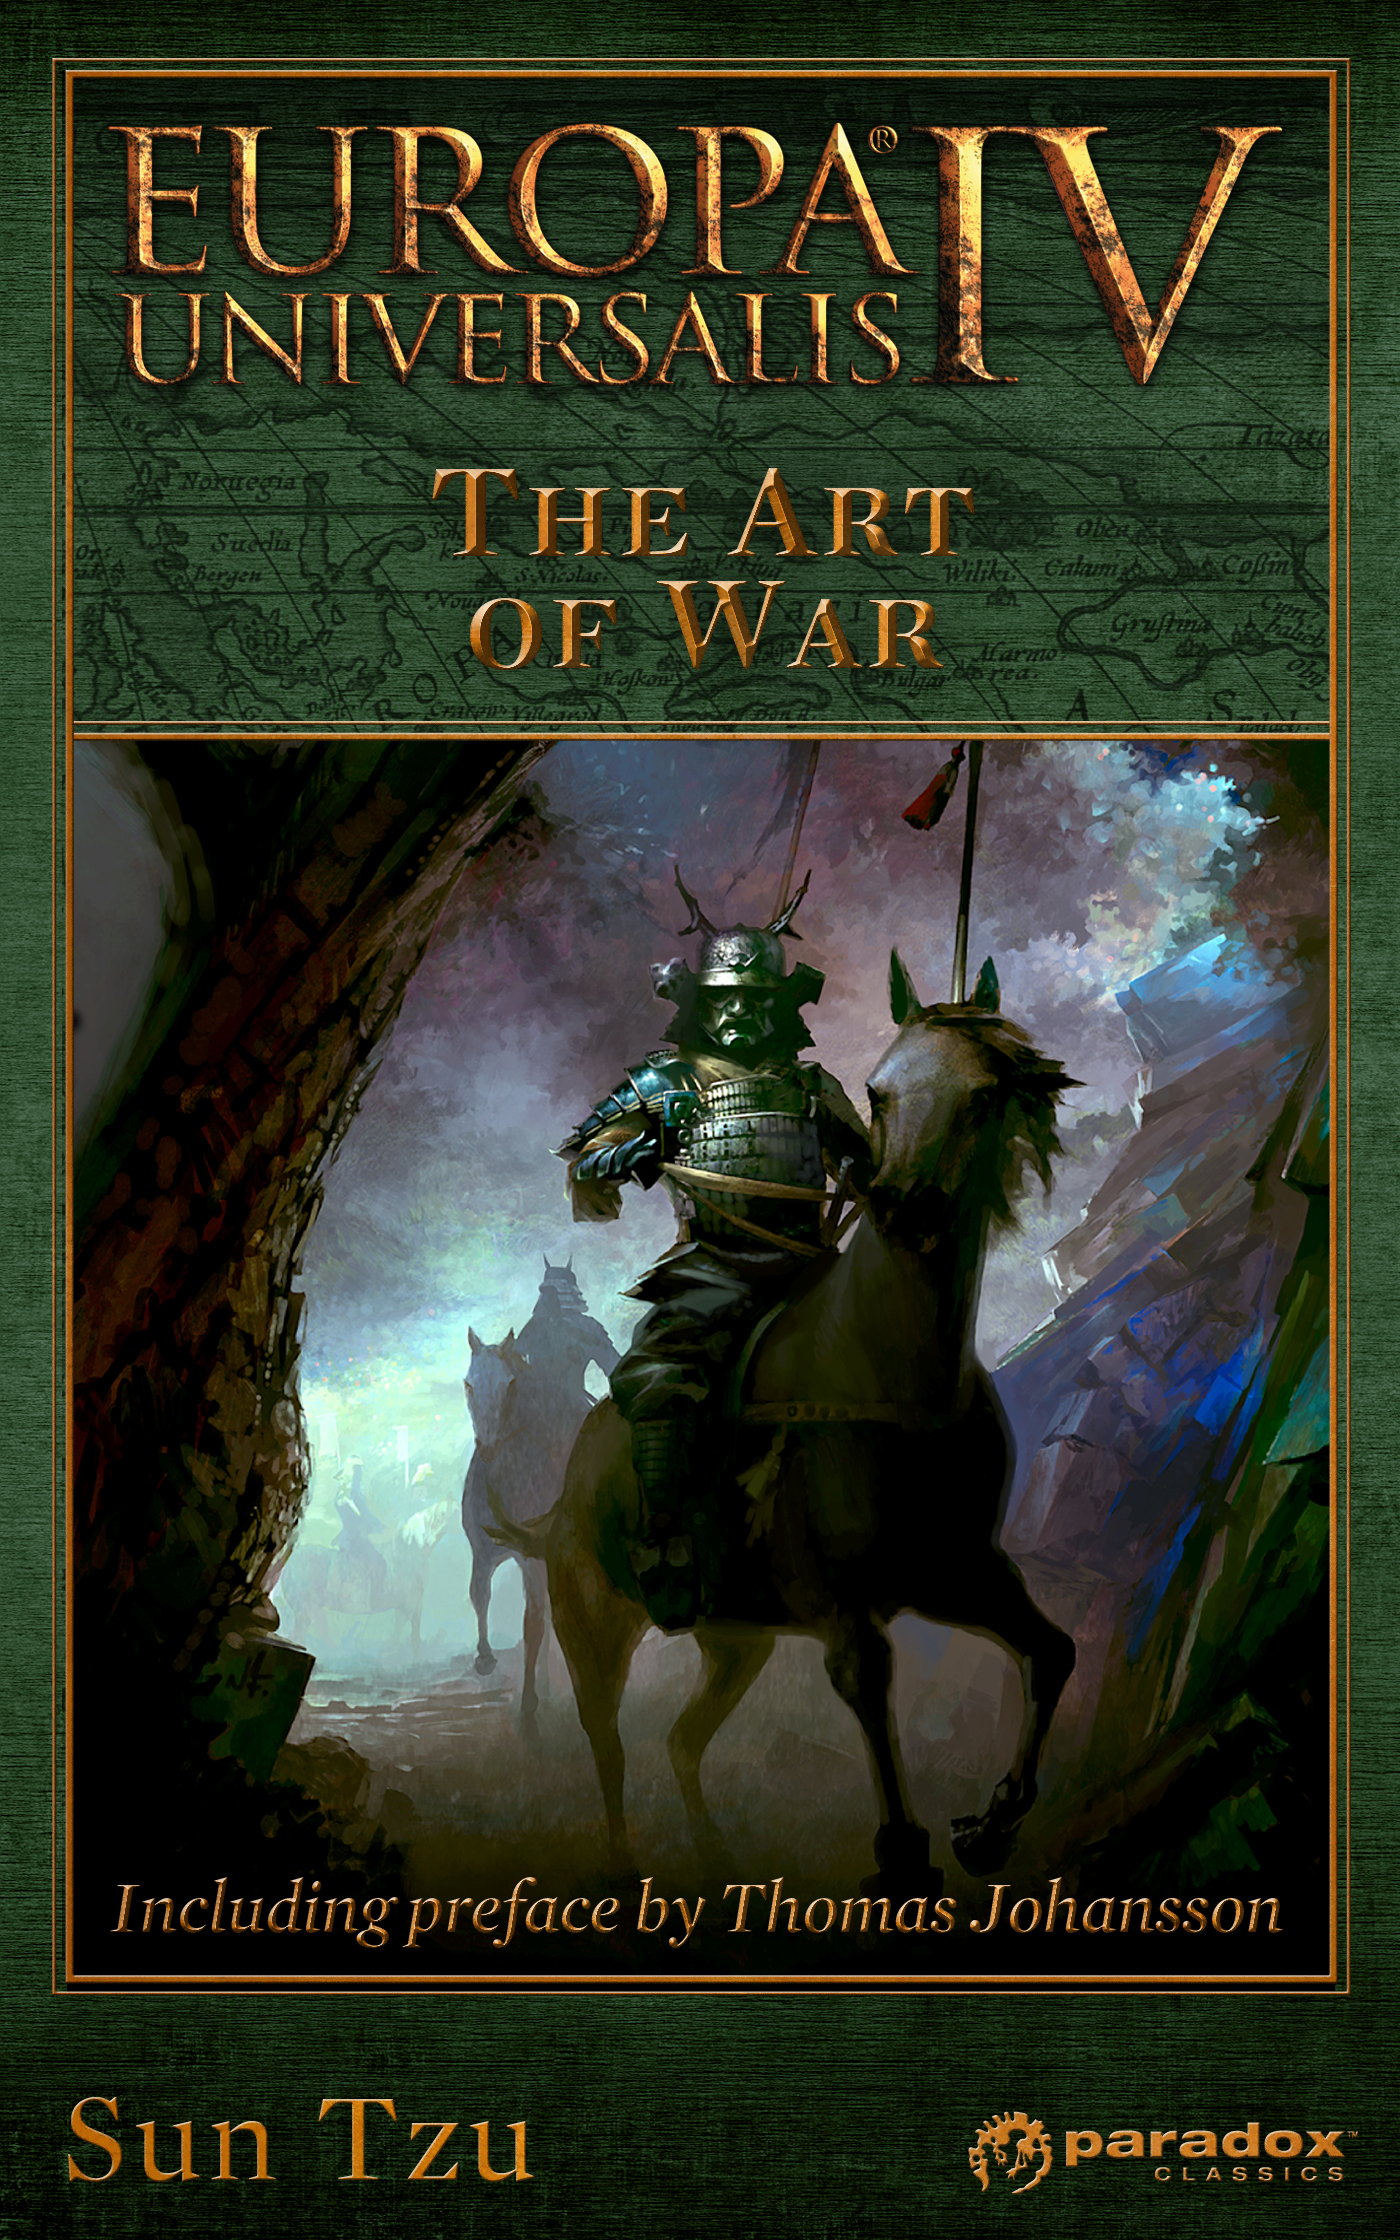 Europa Universalis IV: Art of War E-book screenshot